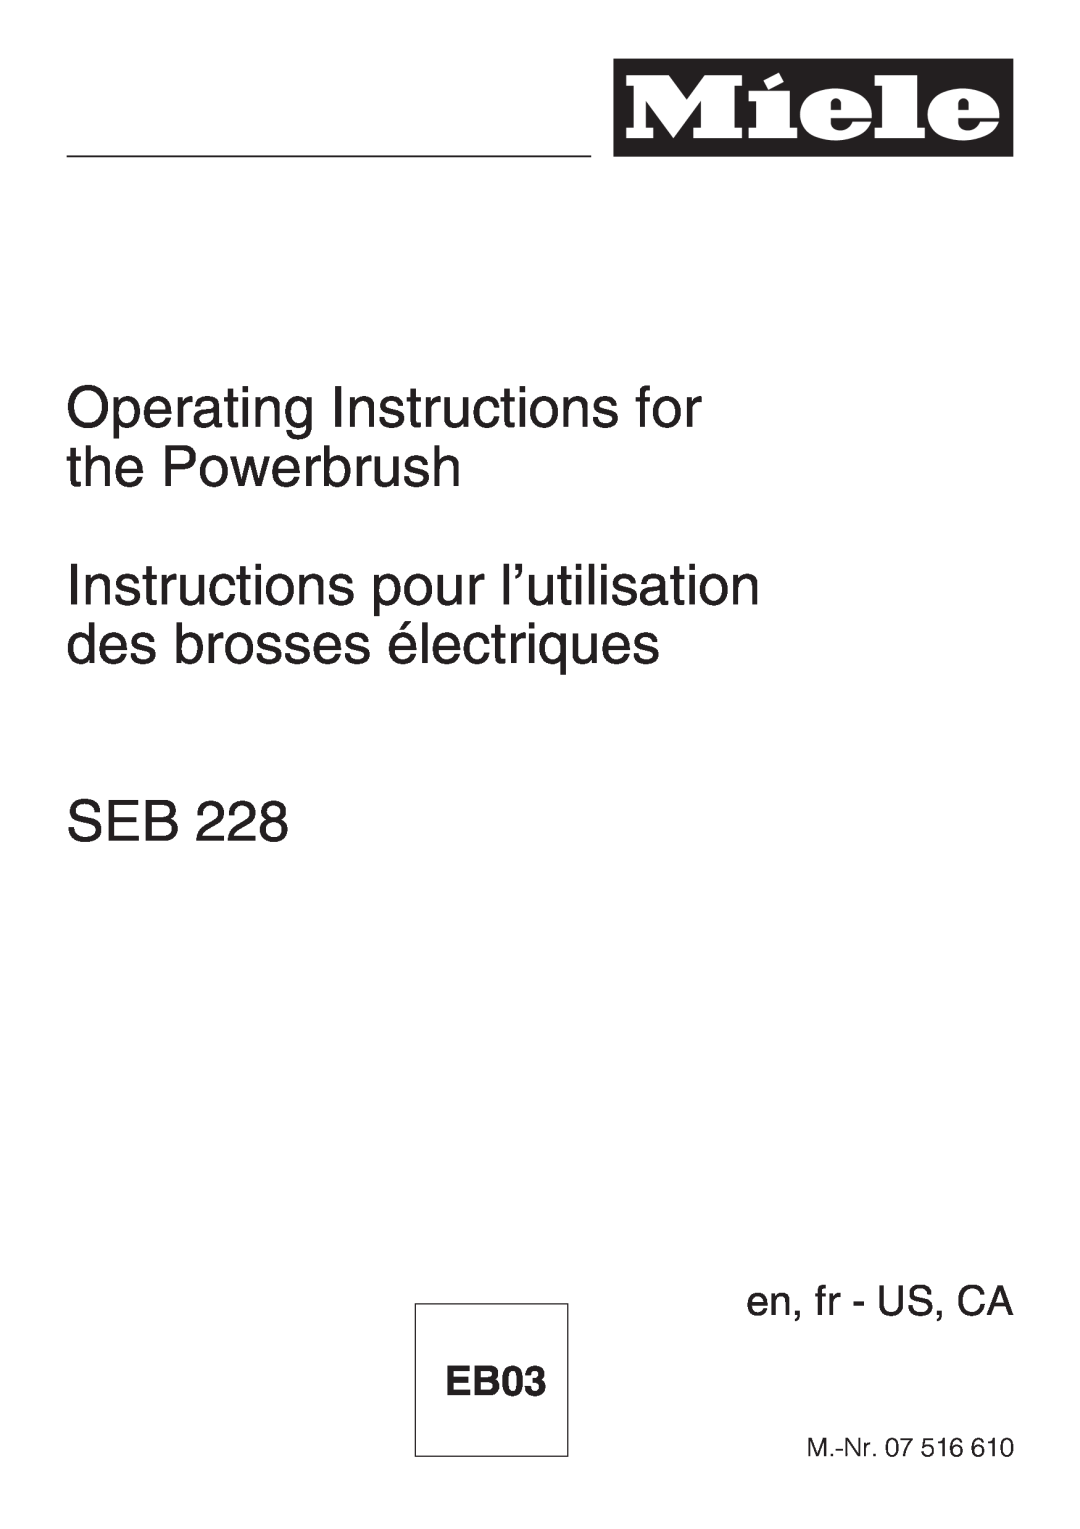 Miele SEB 228 manual Operating Instructions for the Powerbrush, EB03, en, fr - US, CA 